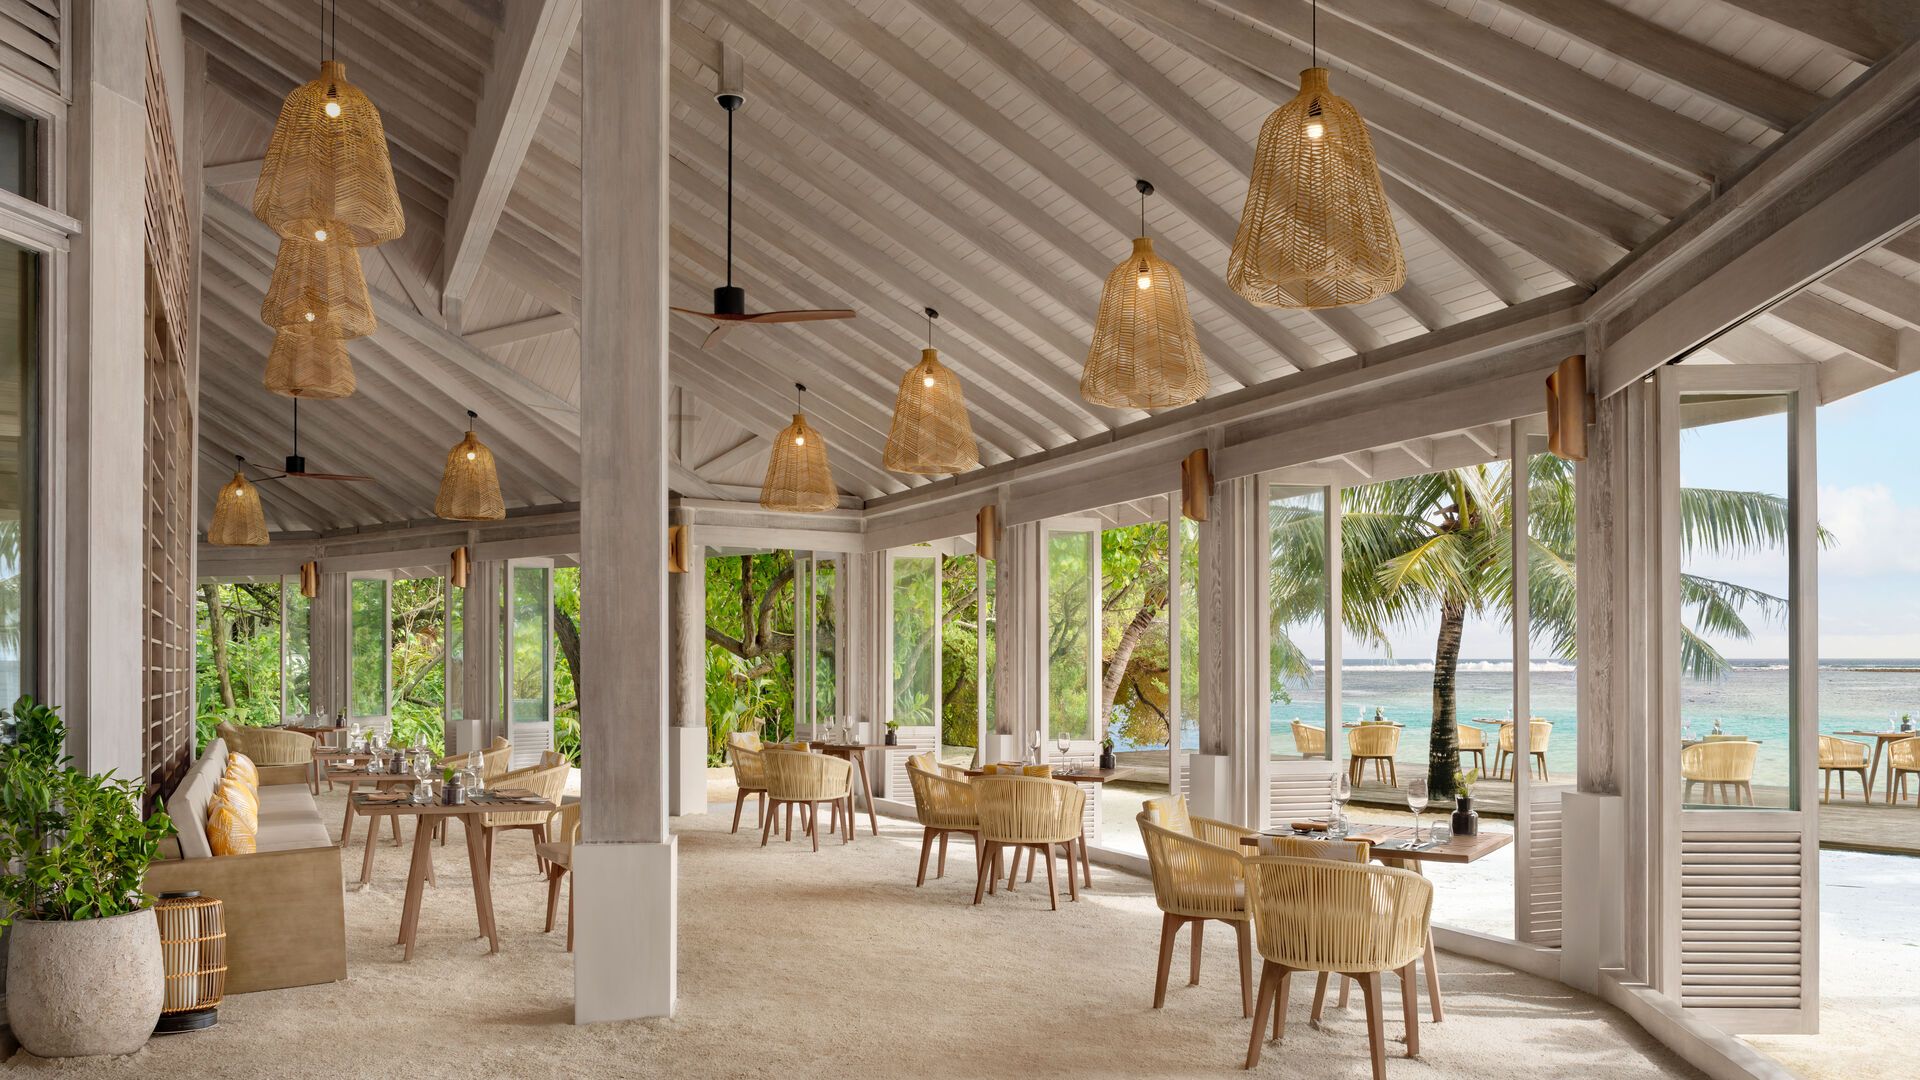 Maldives - Hotel Anantara Veli Maldives Resort 5* - transfert inclus